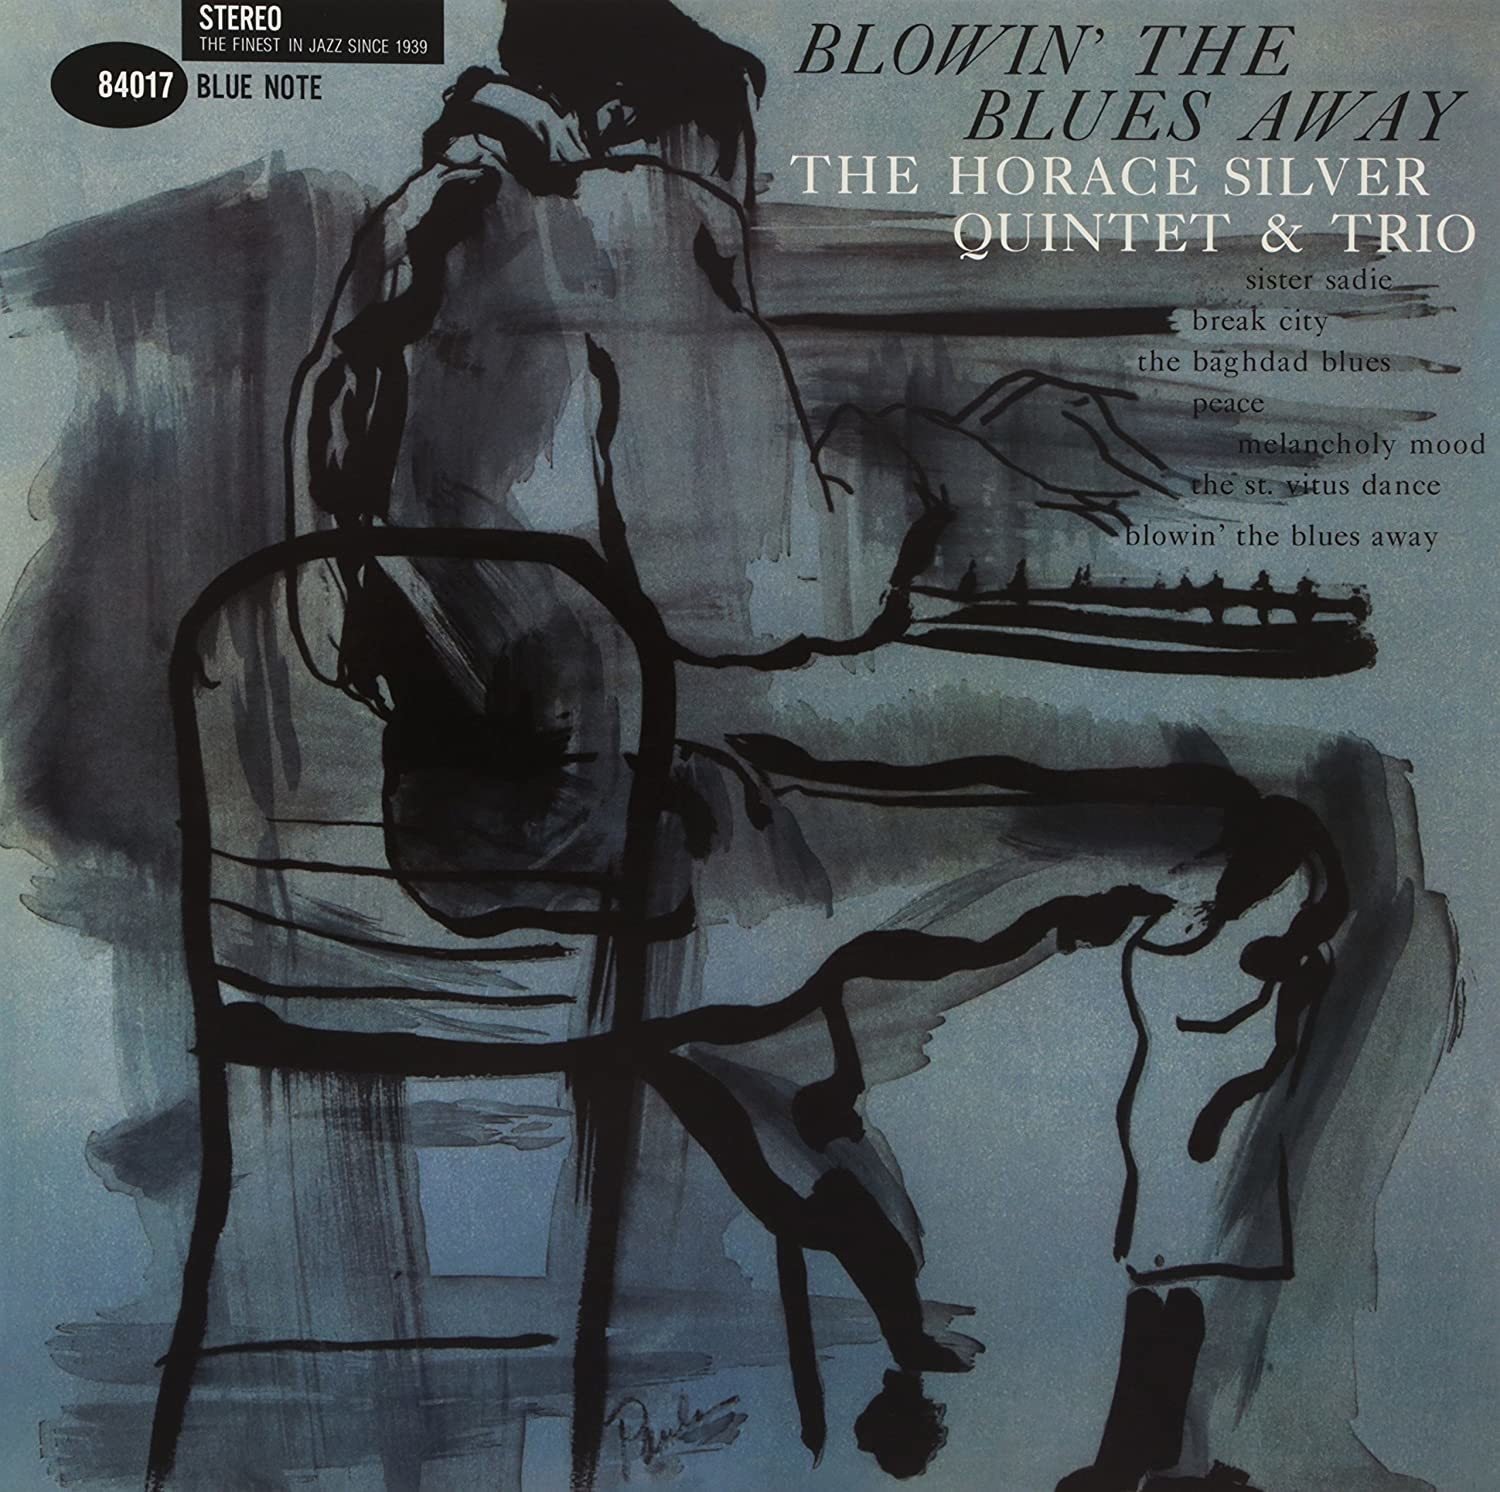 LP Horace Silver - Blowin' The Blues Away (2 LP)